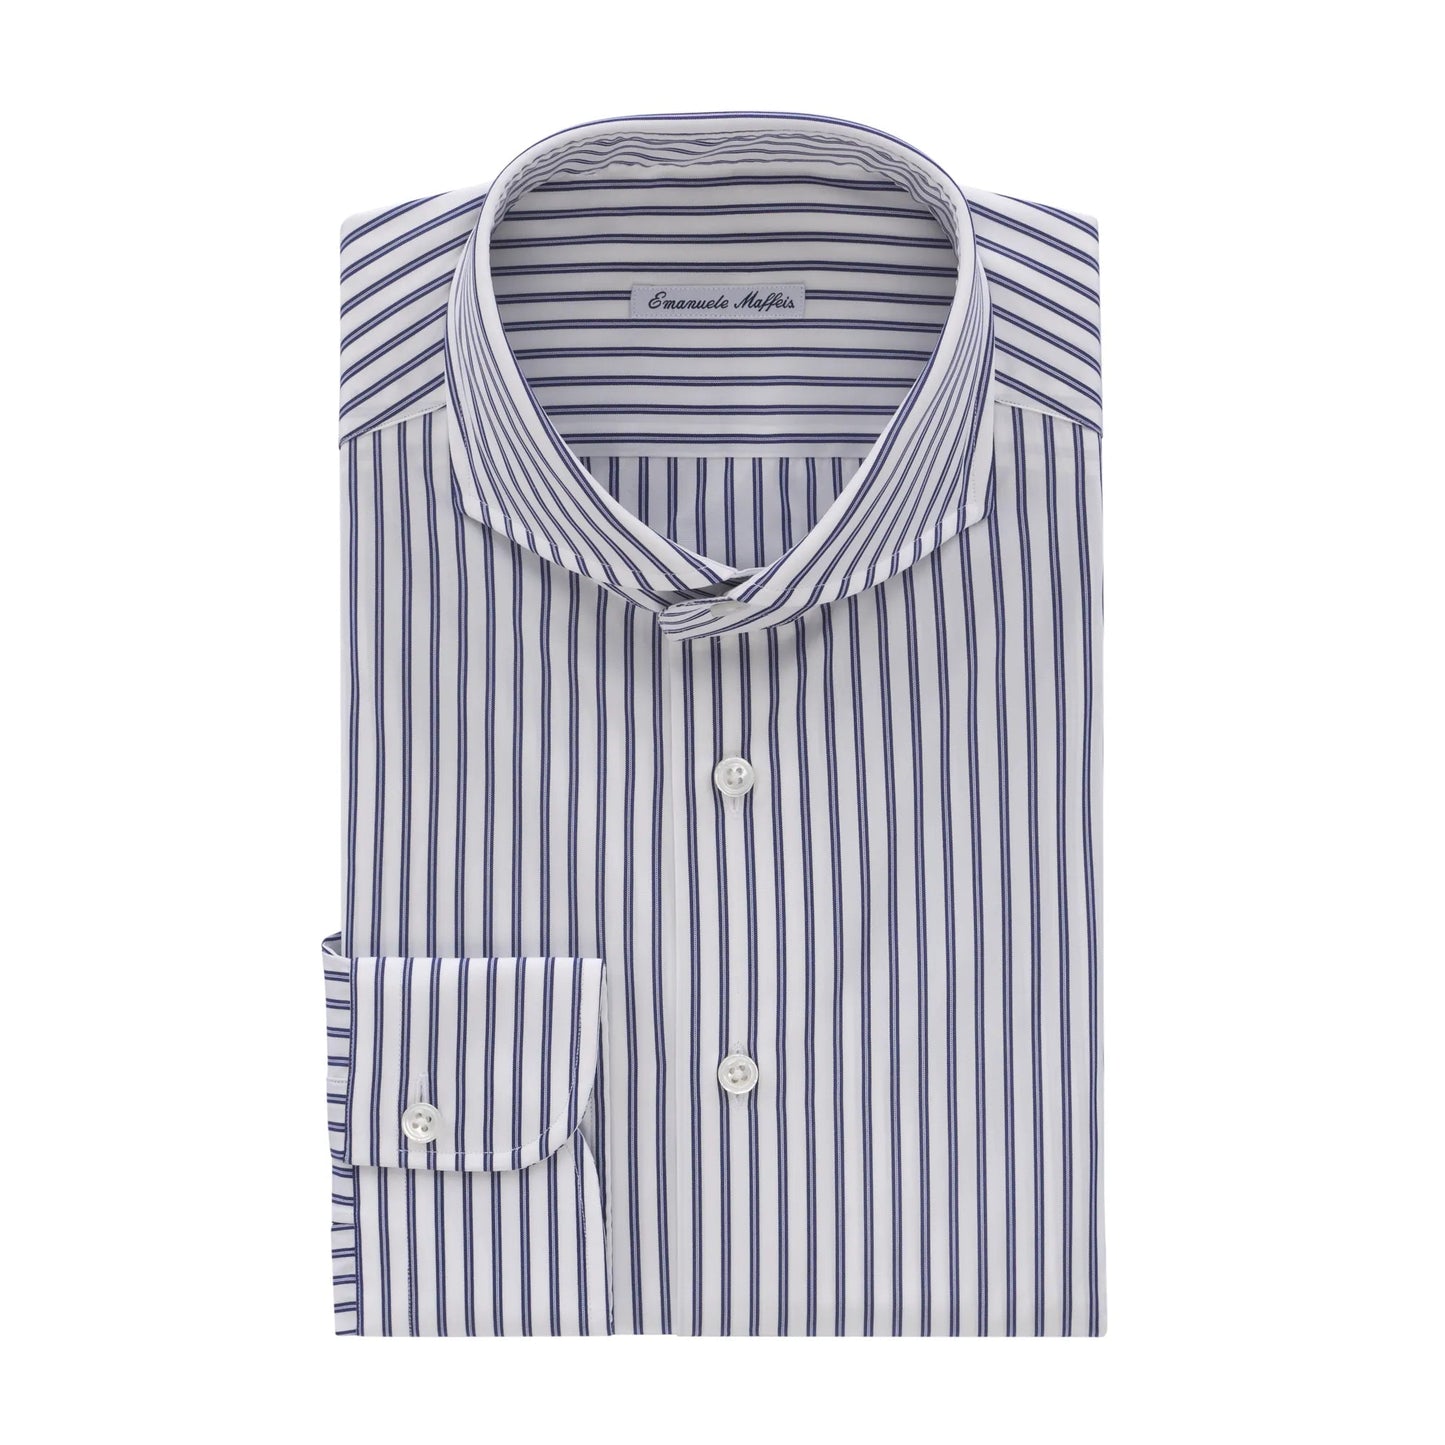 Emanuele Maffeis Cotton White Shirt with Blue Stripes - SARTALE